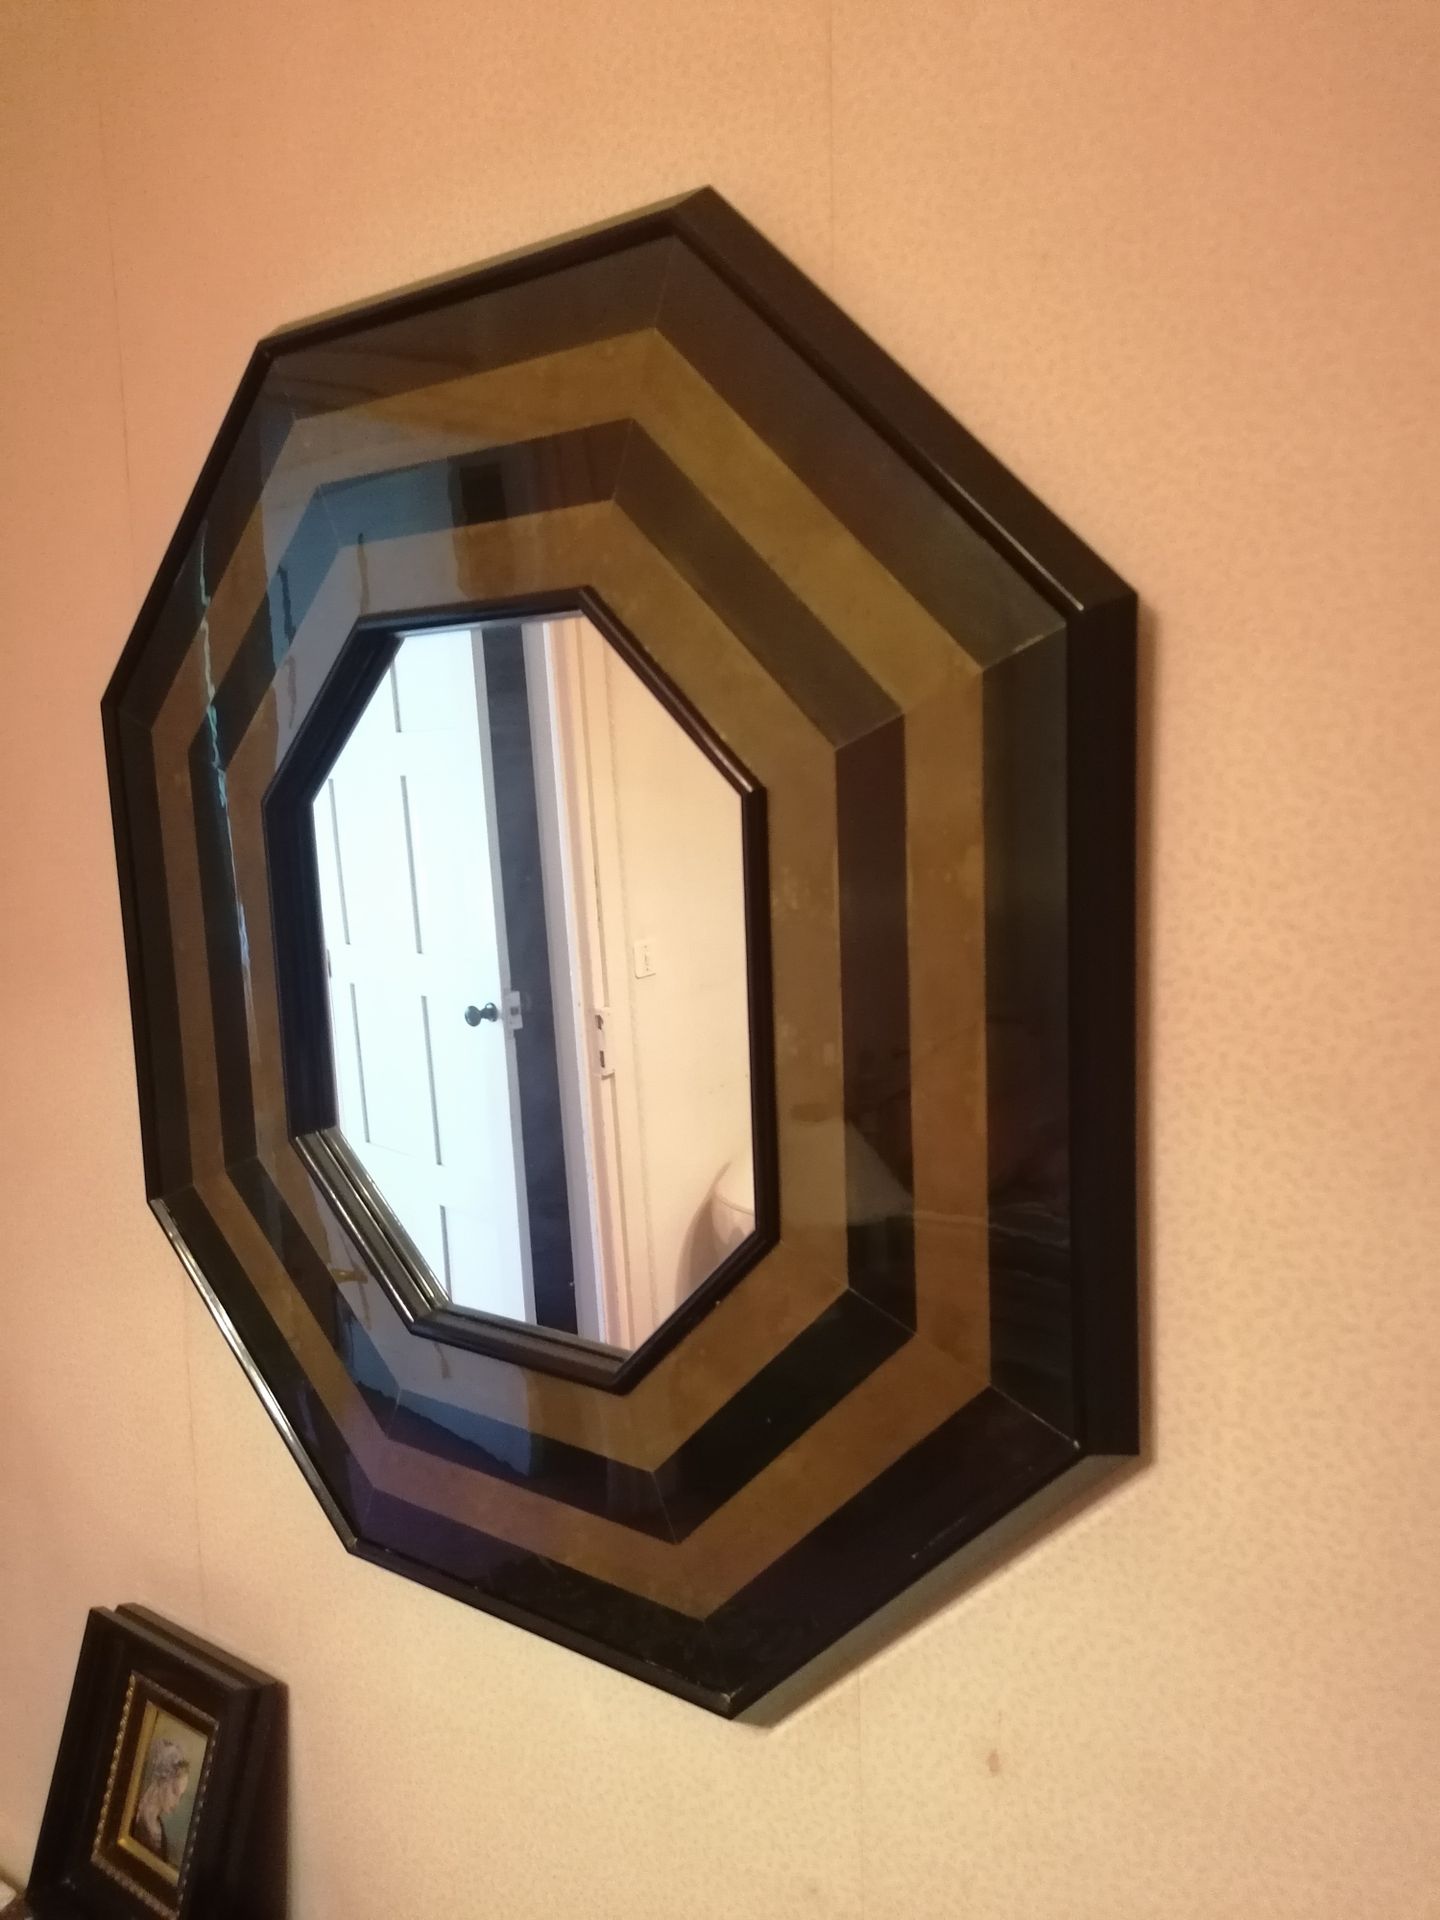 Null 
Octagonal mirror

Dimensions: 69x74 cm